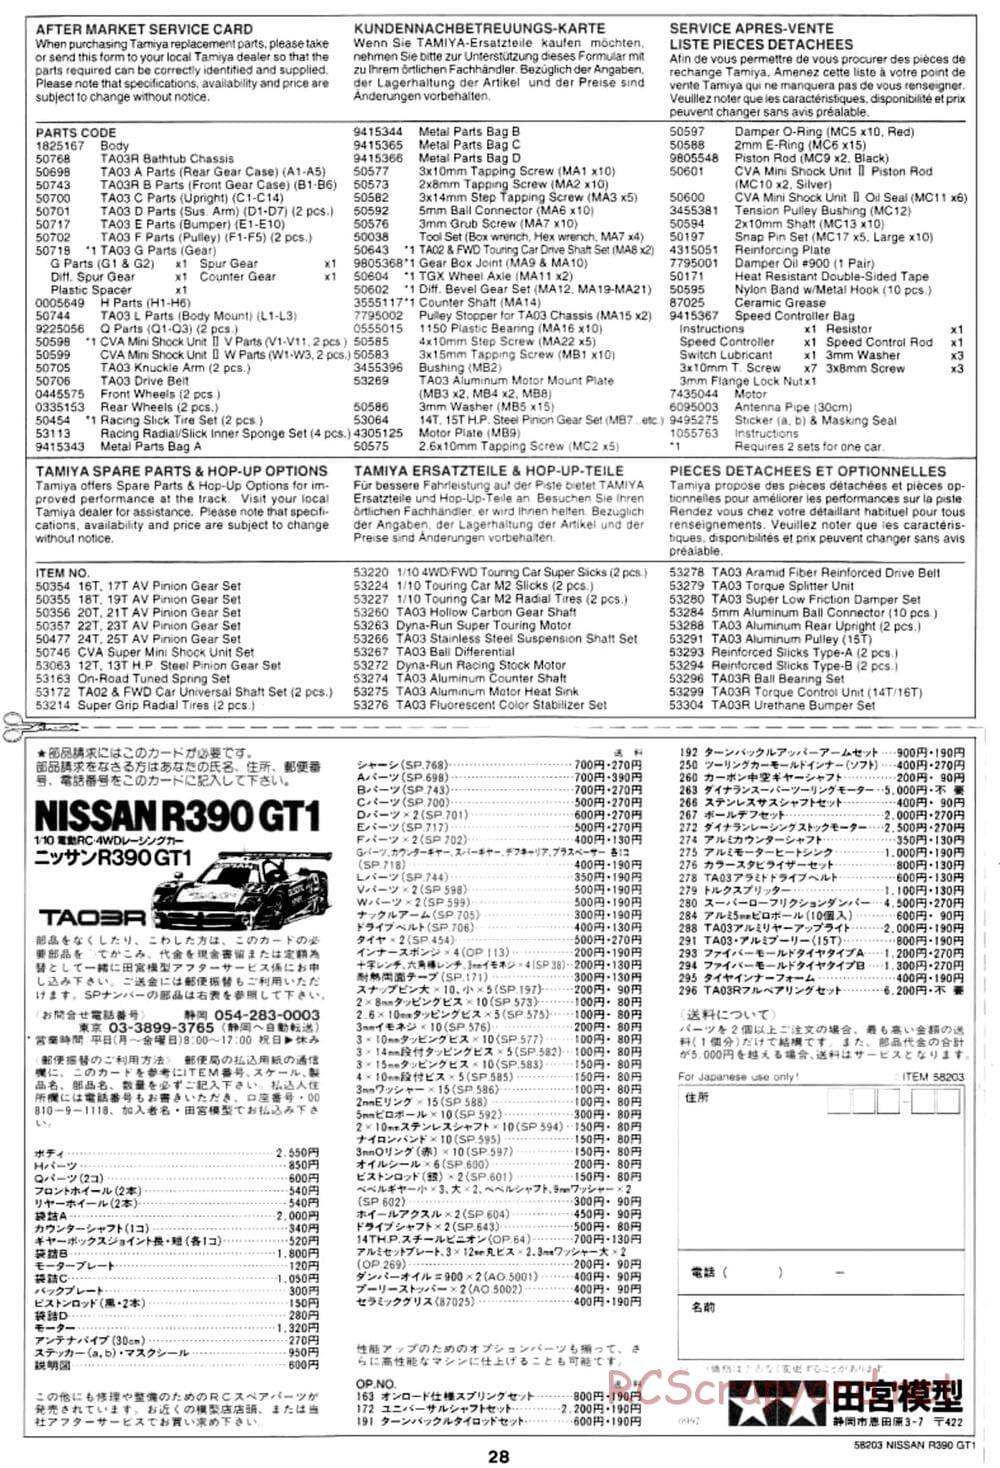 Tamiya - Nissan R390 GT1 - TA-03R Chassis - Manual - Page 28